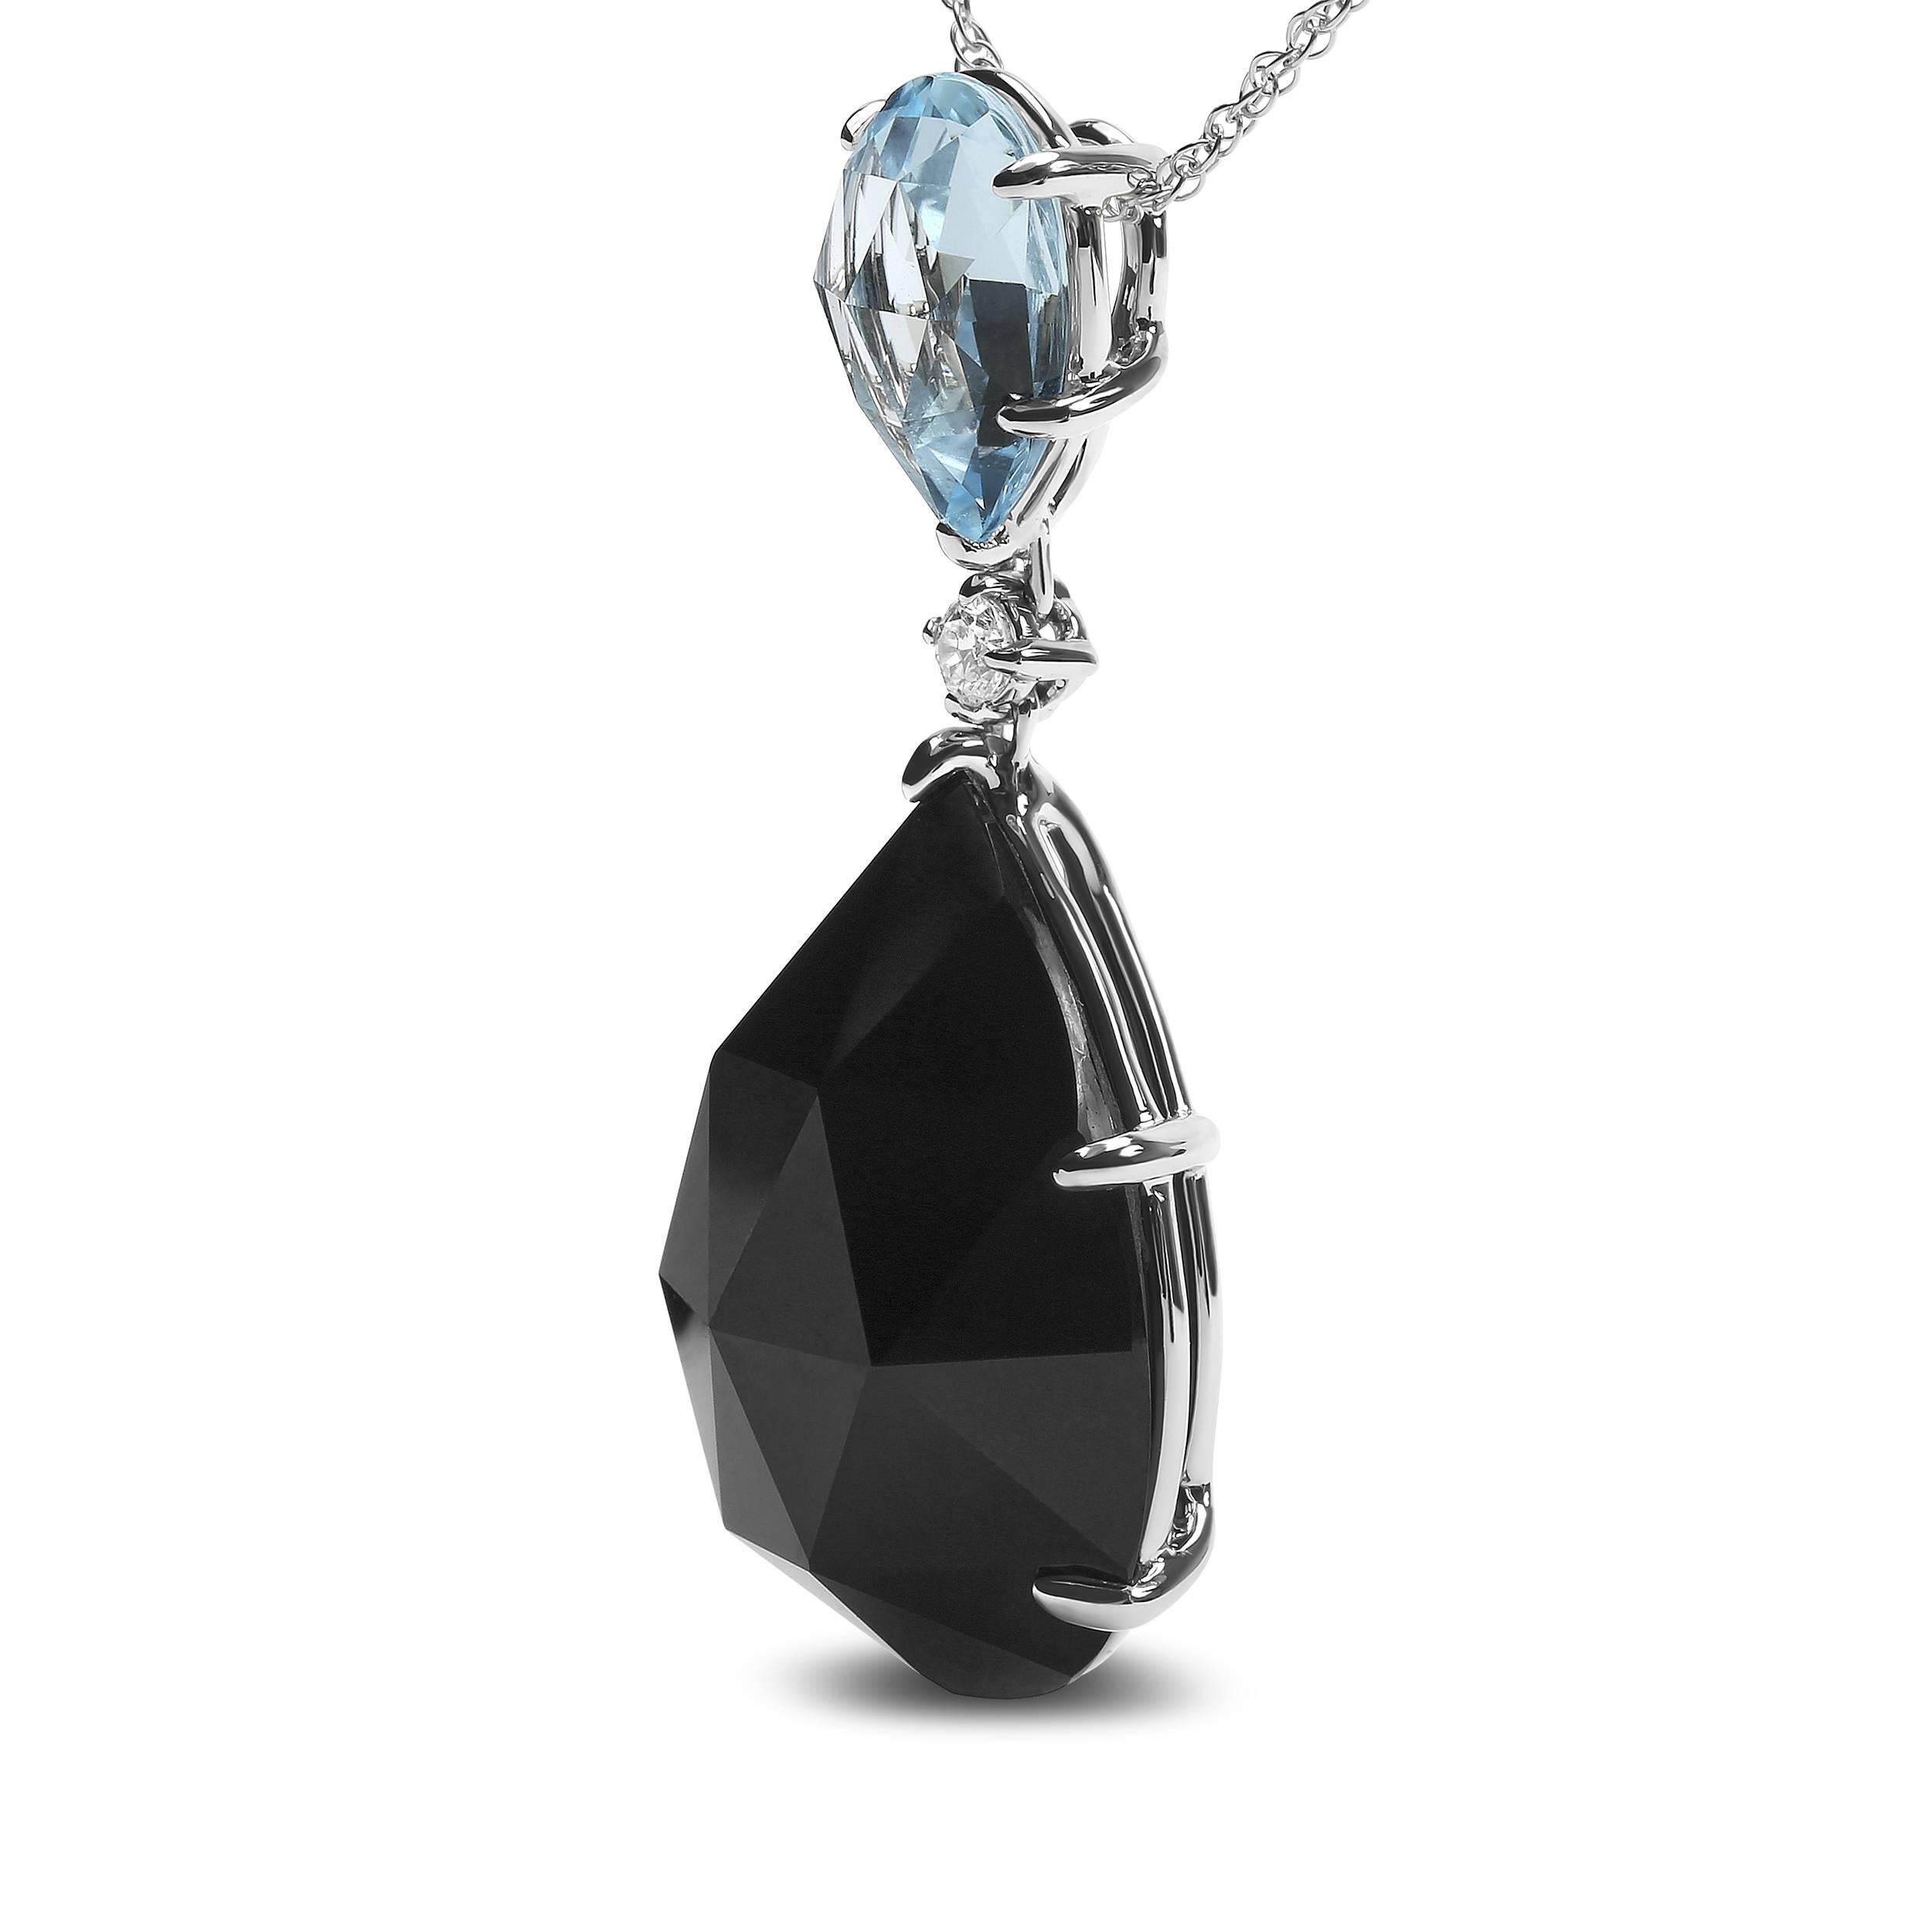 Contemporary 18K White Gold Diamond Accent & Sky Blue Topaz & Black Onyx Pendant Necklace For Sale